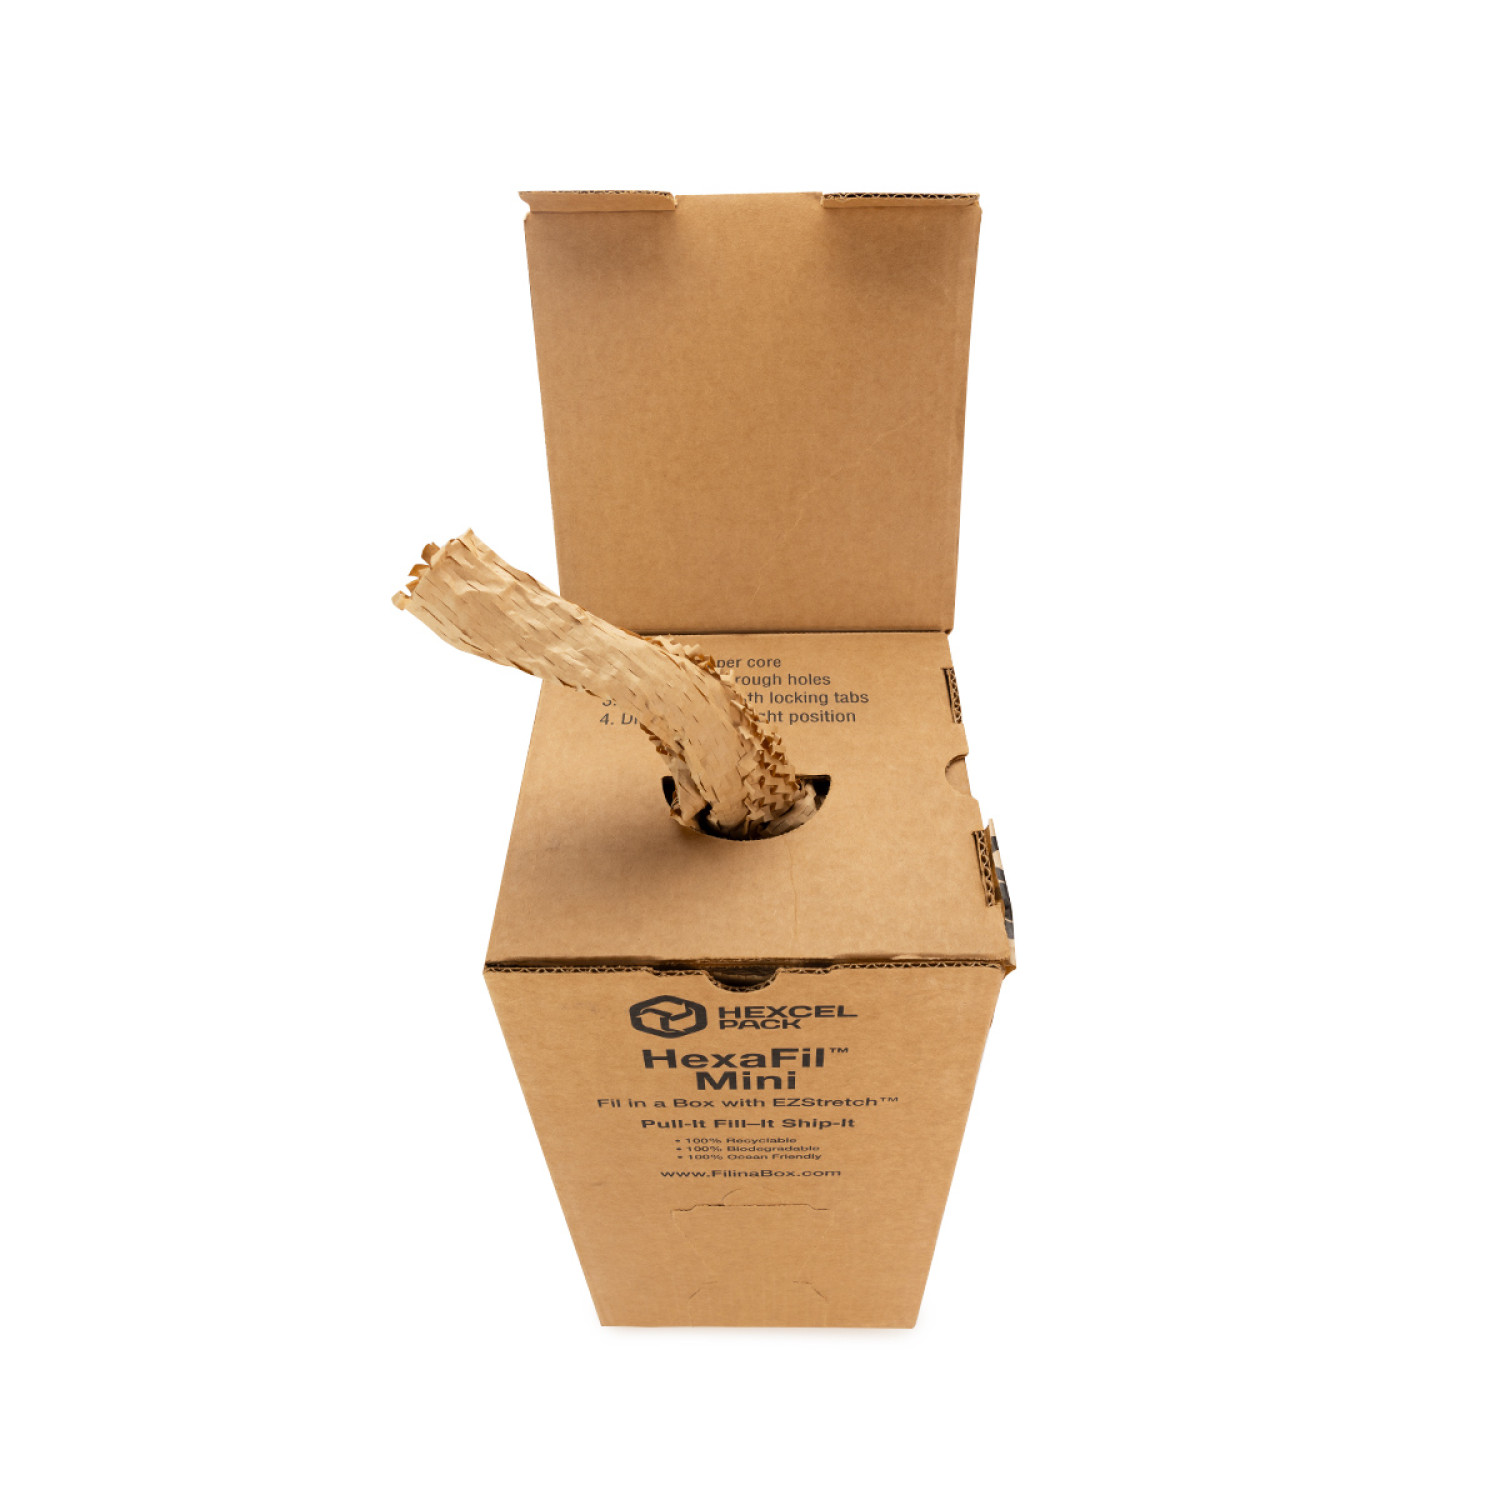 Kraft Paper - Kraft Paper Box, Kraft Bags, Paper Tubes, Honeycomb